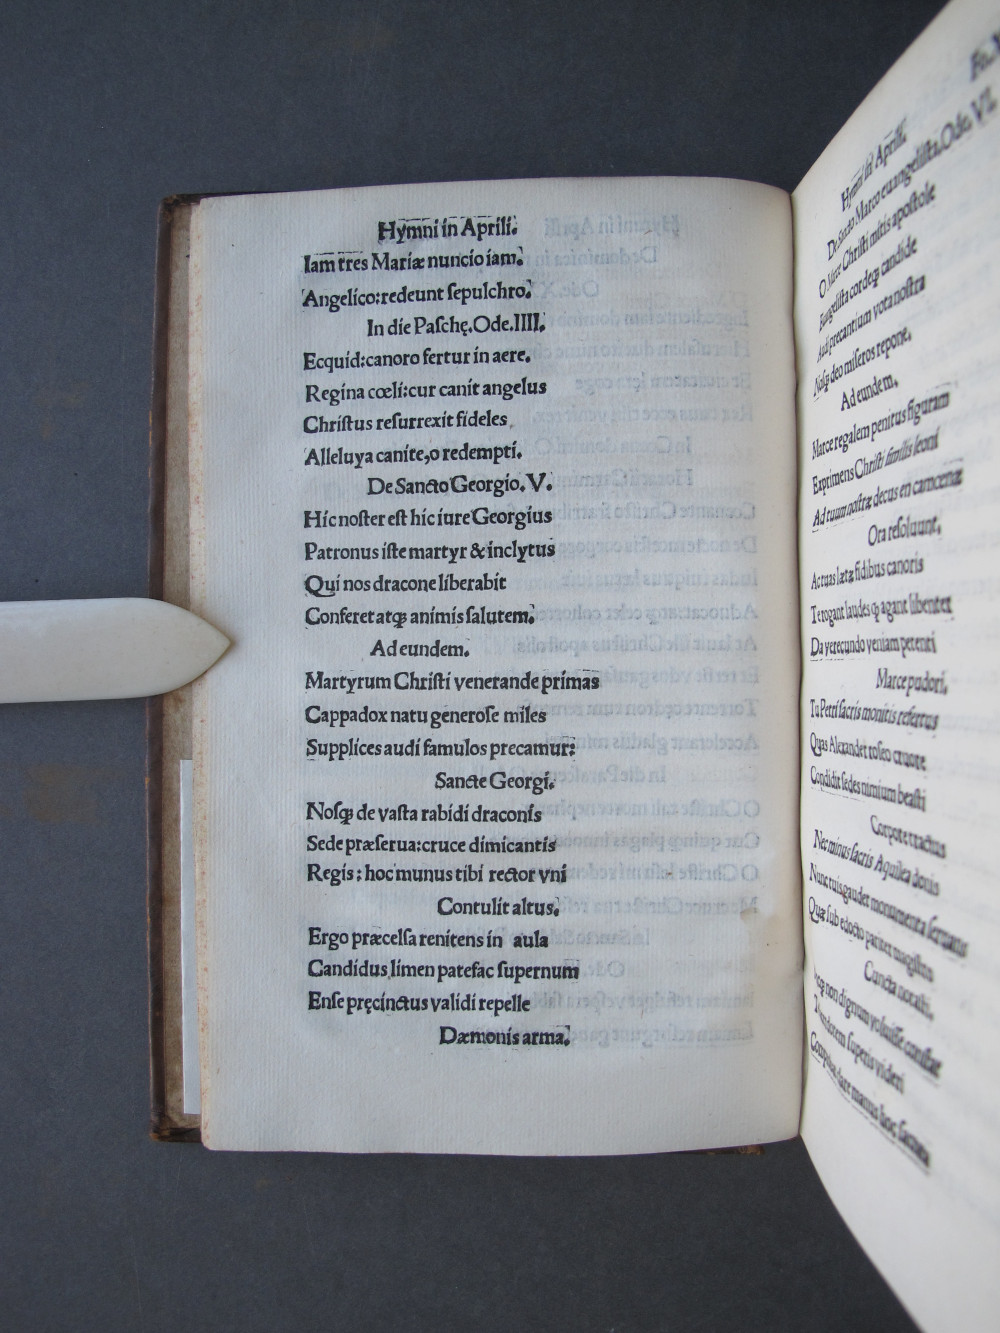 Folio 14 verso